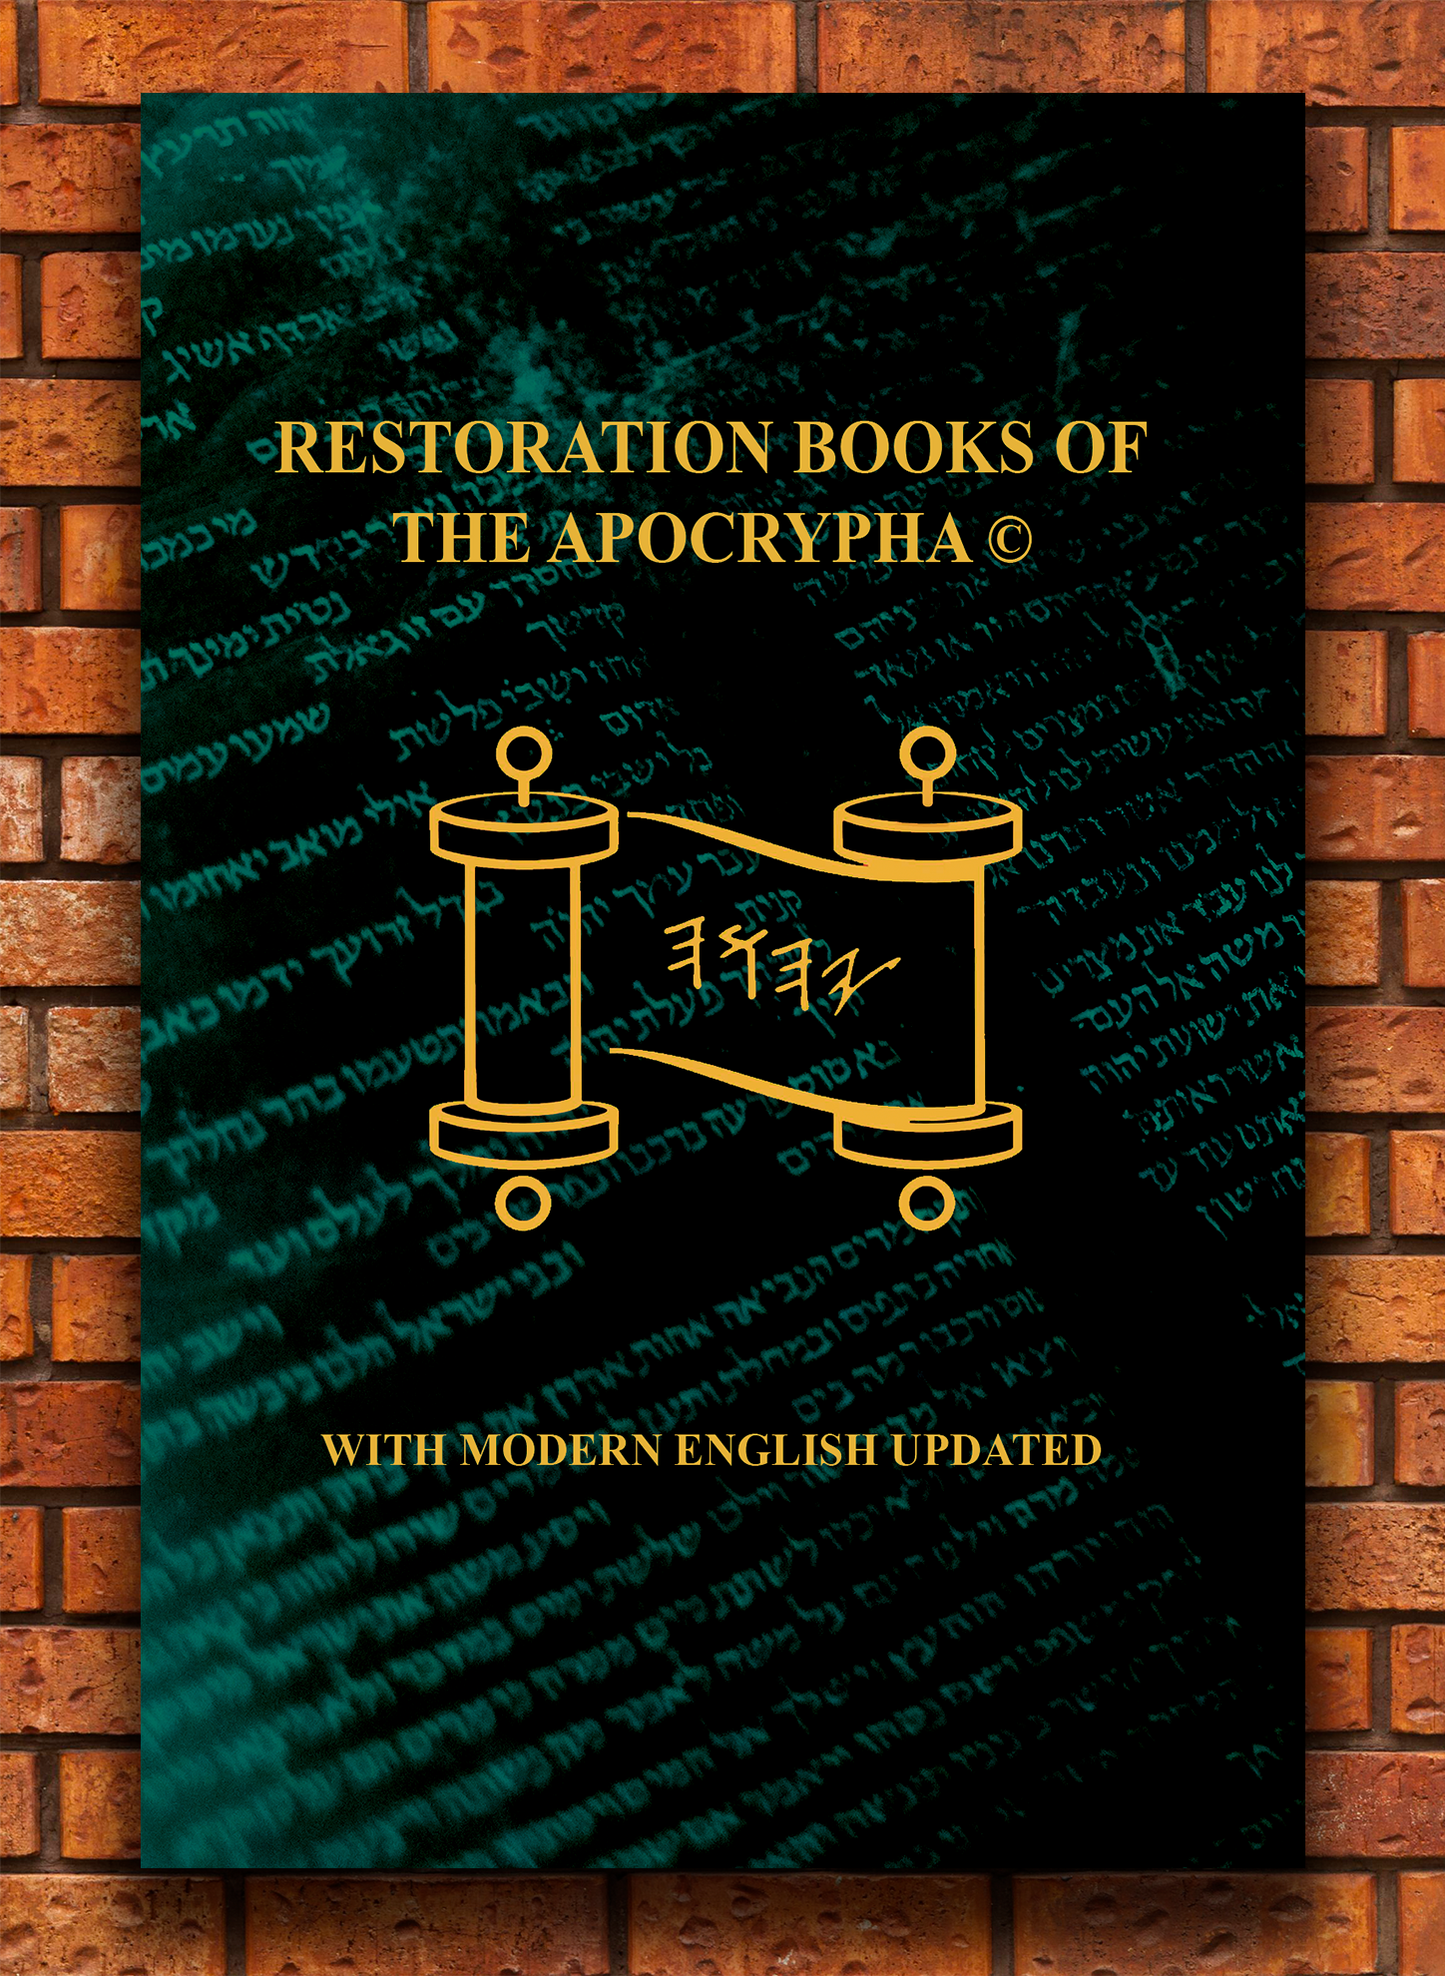 Confirming Four Set The Restoration Scriptures True Name Eighth Larger Print Edition - Genesis-Revelation + RSTNE Apocrypha + RSTNE Study Guide + Jasher